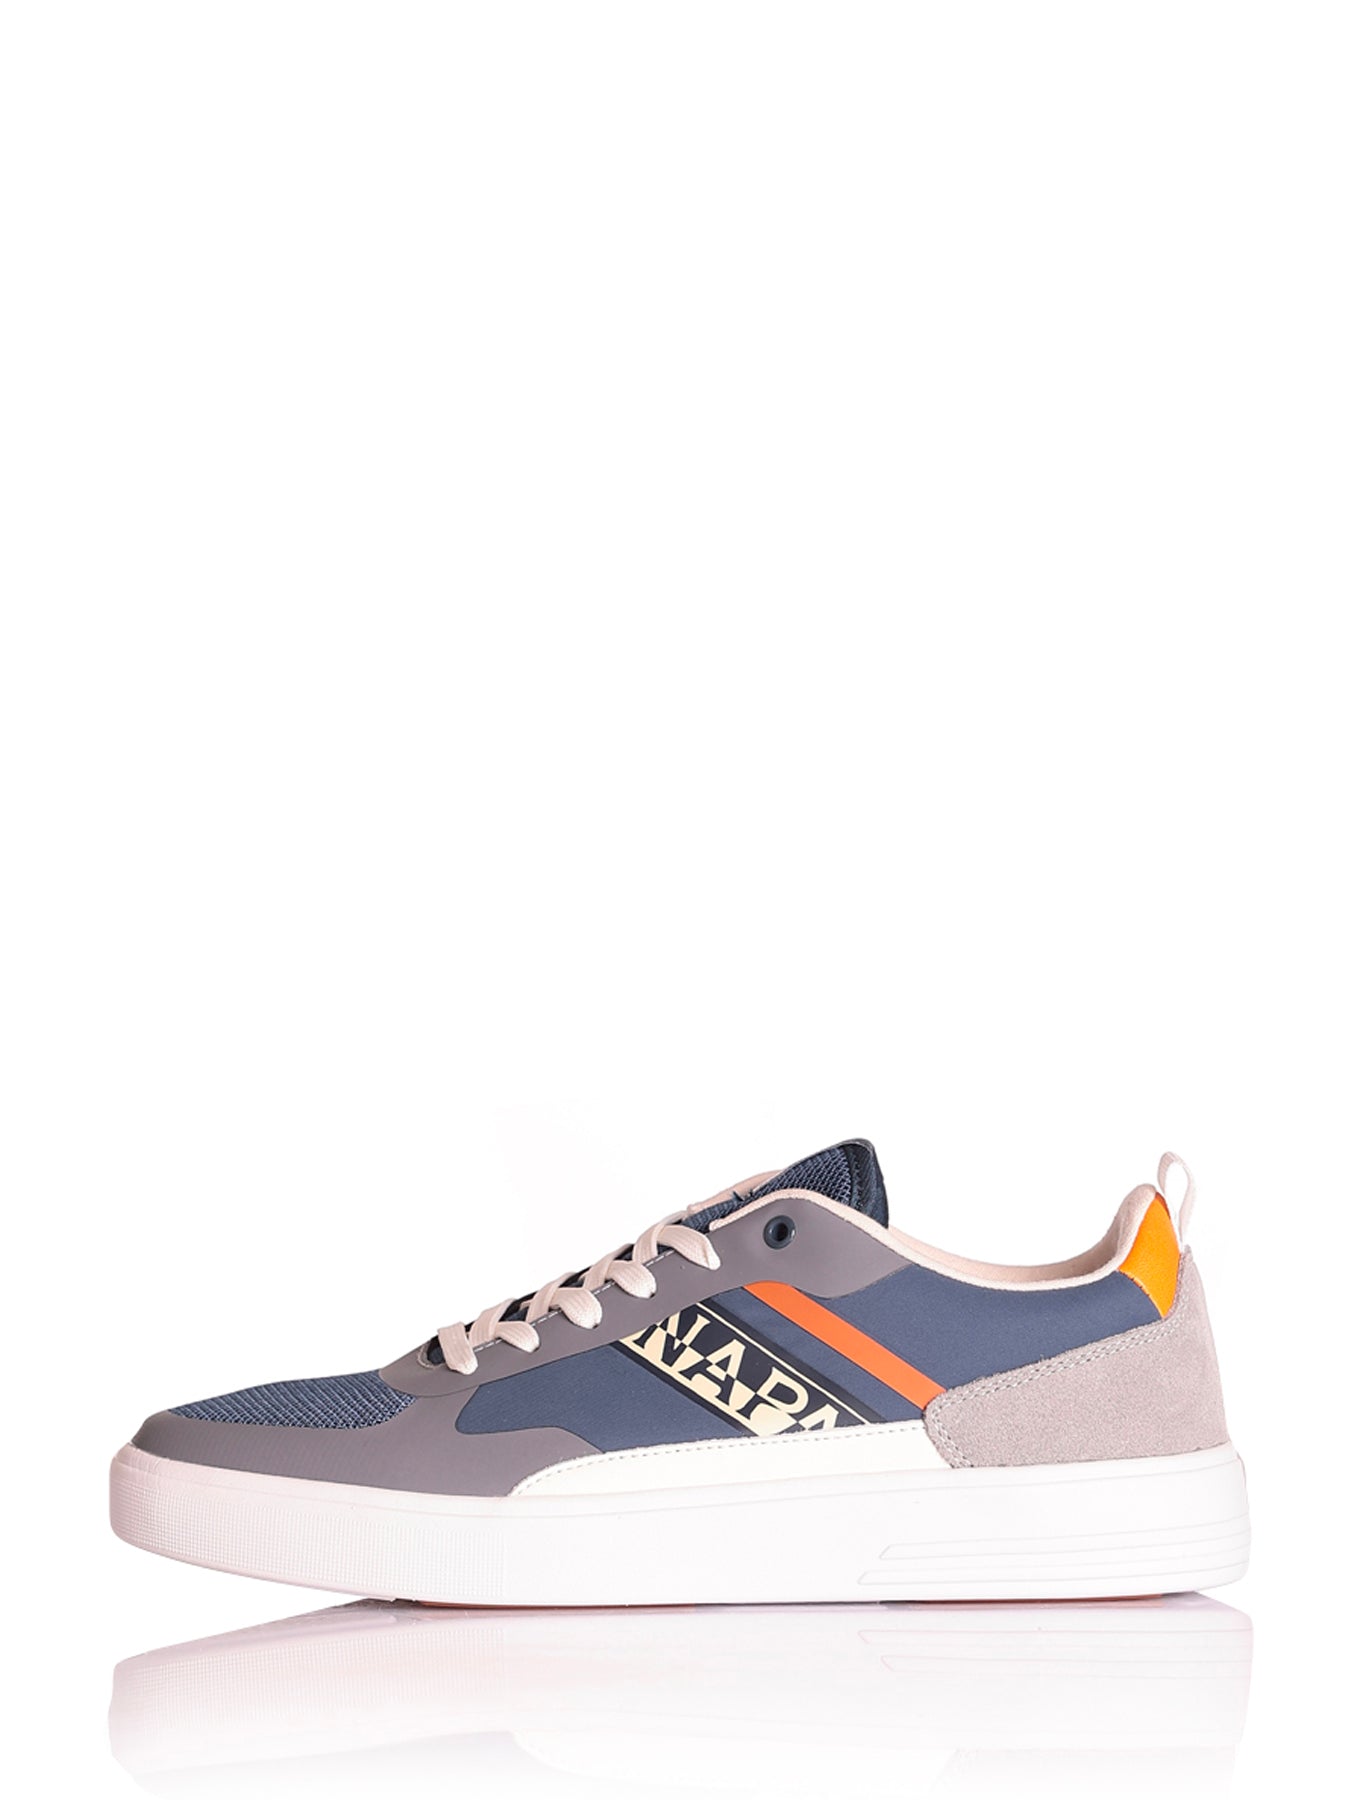 Napapijri Sneakers Np0a4hkr Navy/grey